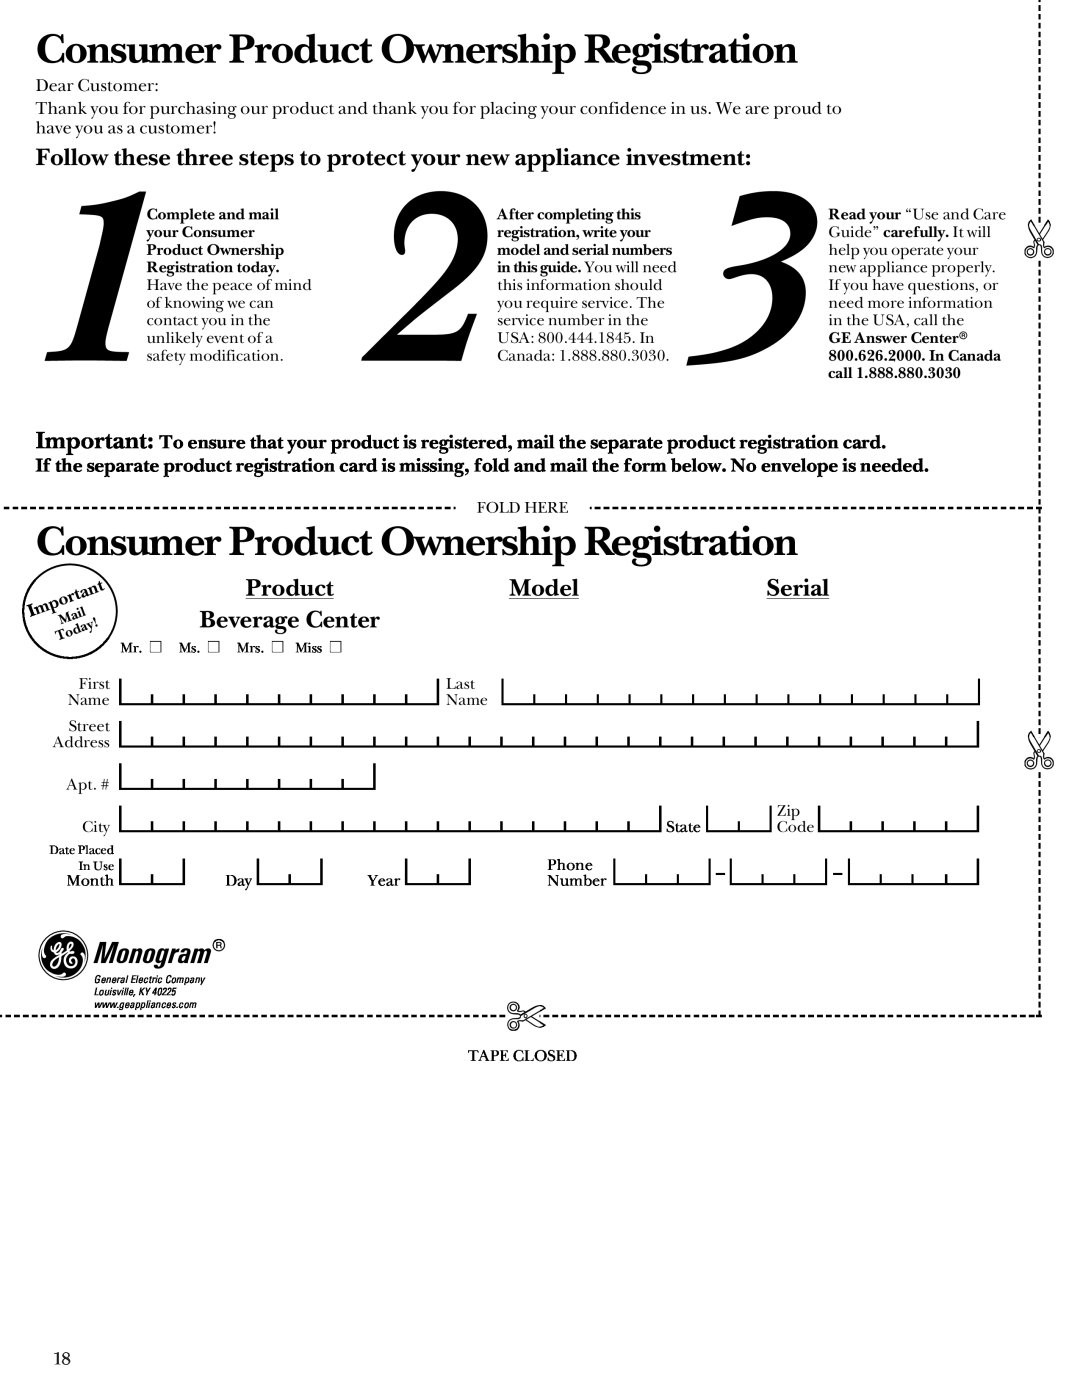 GE Monogram ZDB24 manual Consumer Product Ownership Registration, Monogram, Model, Serial, Beverage Center 